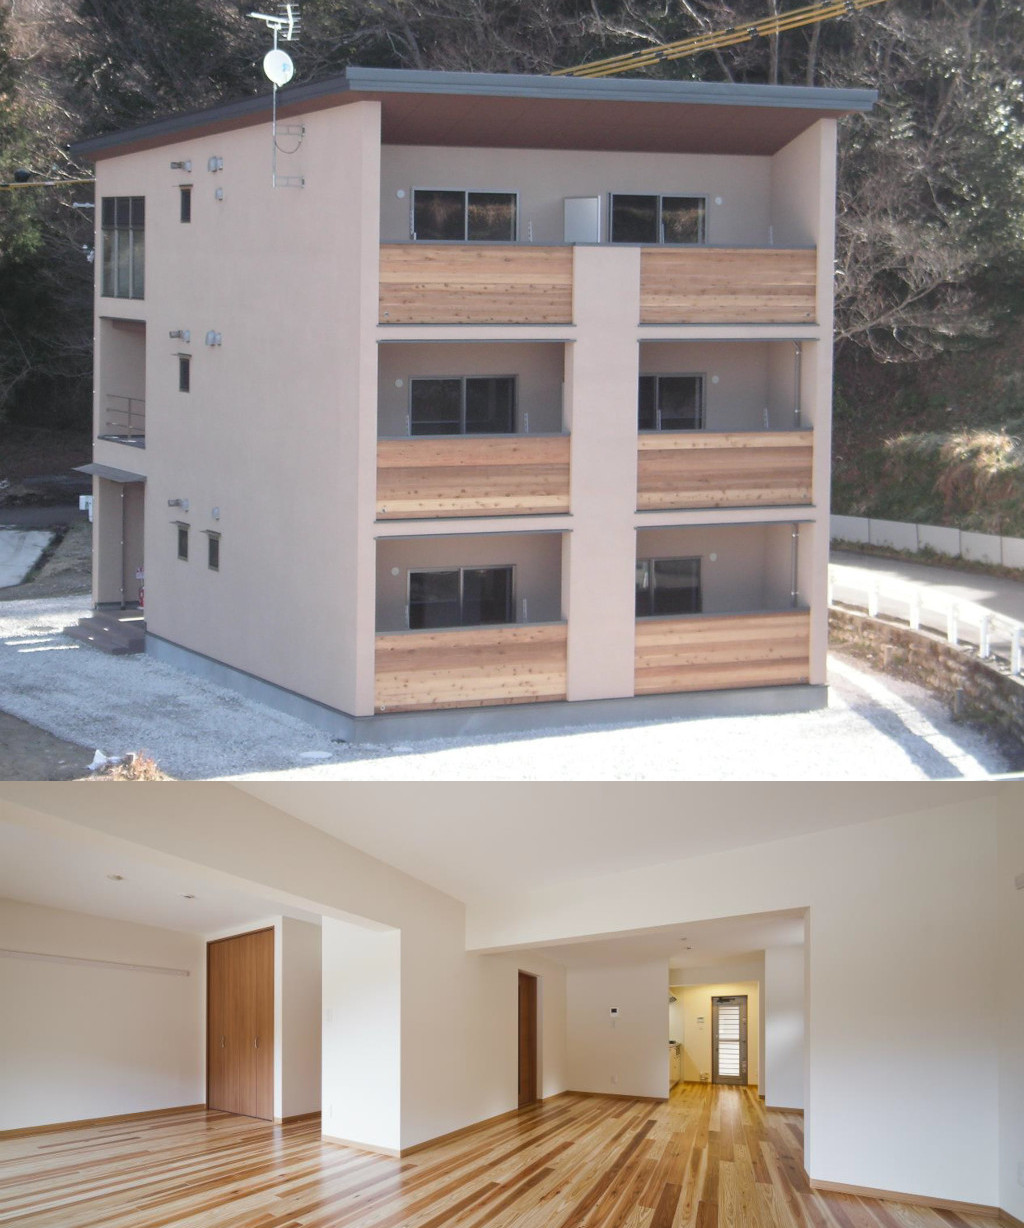 Employee dormitory of Kochi Otoyo Sawmill Co., Ltd.